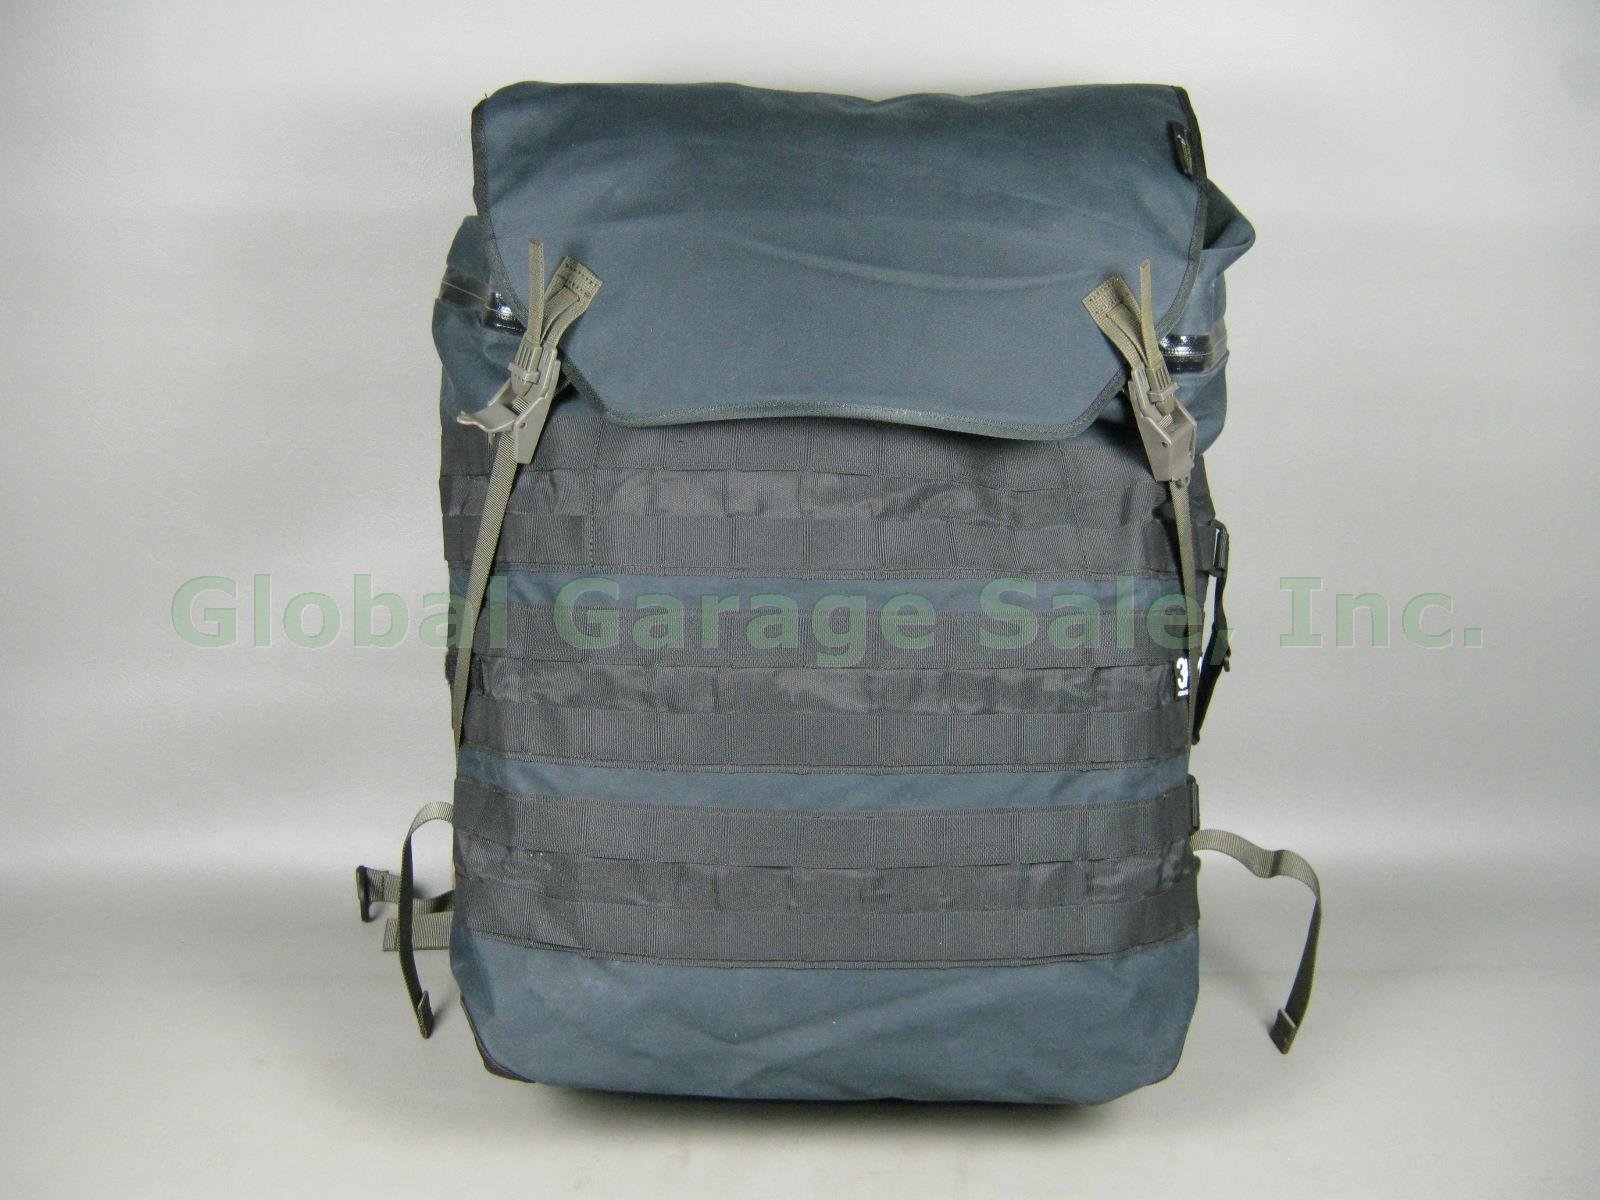 RARE Acronym 3rd Arm 3A-7TS Tec Sys Bagjack Messenger Bag Backpack No Reserve!